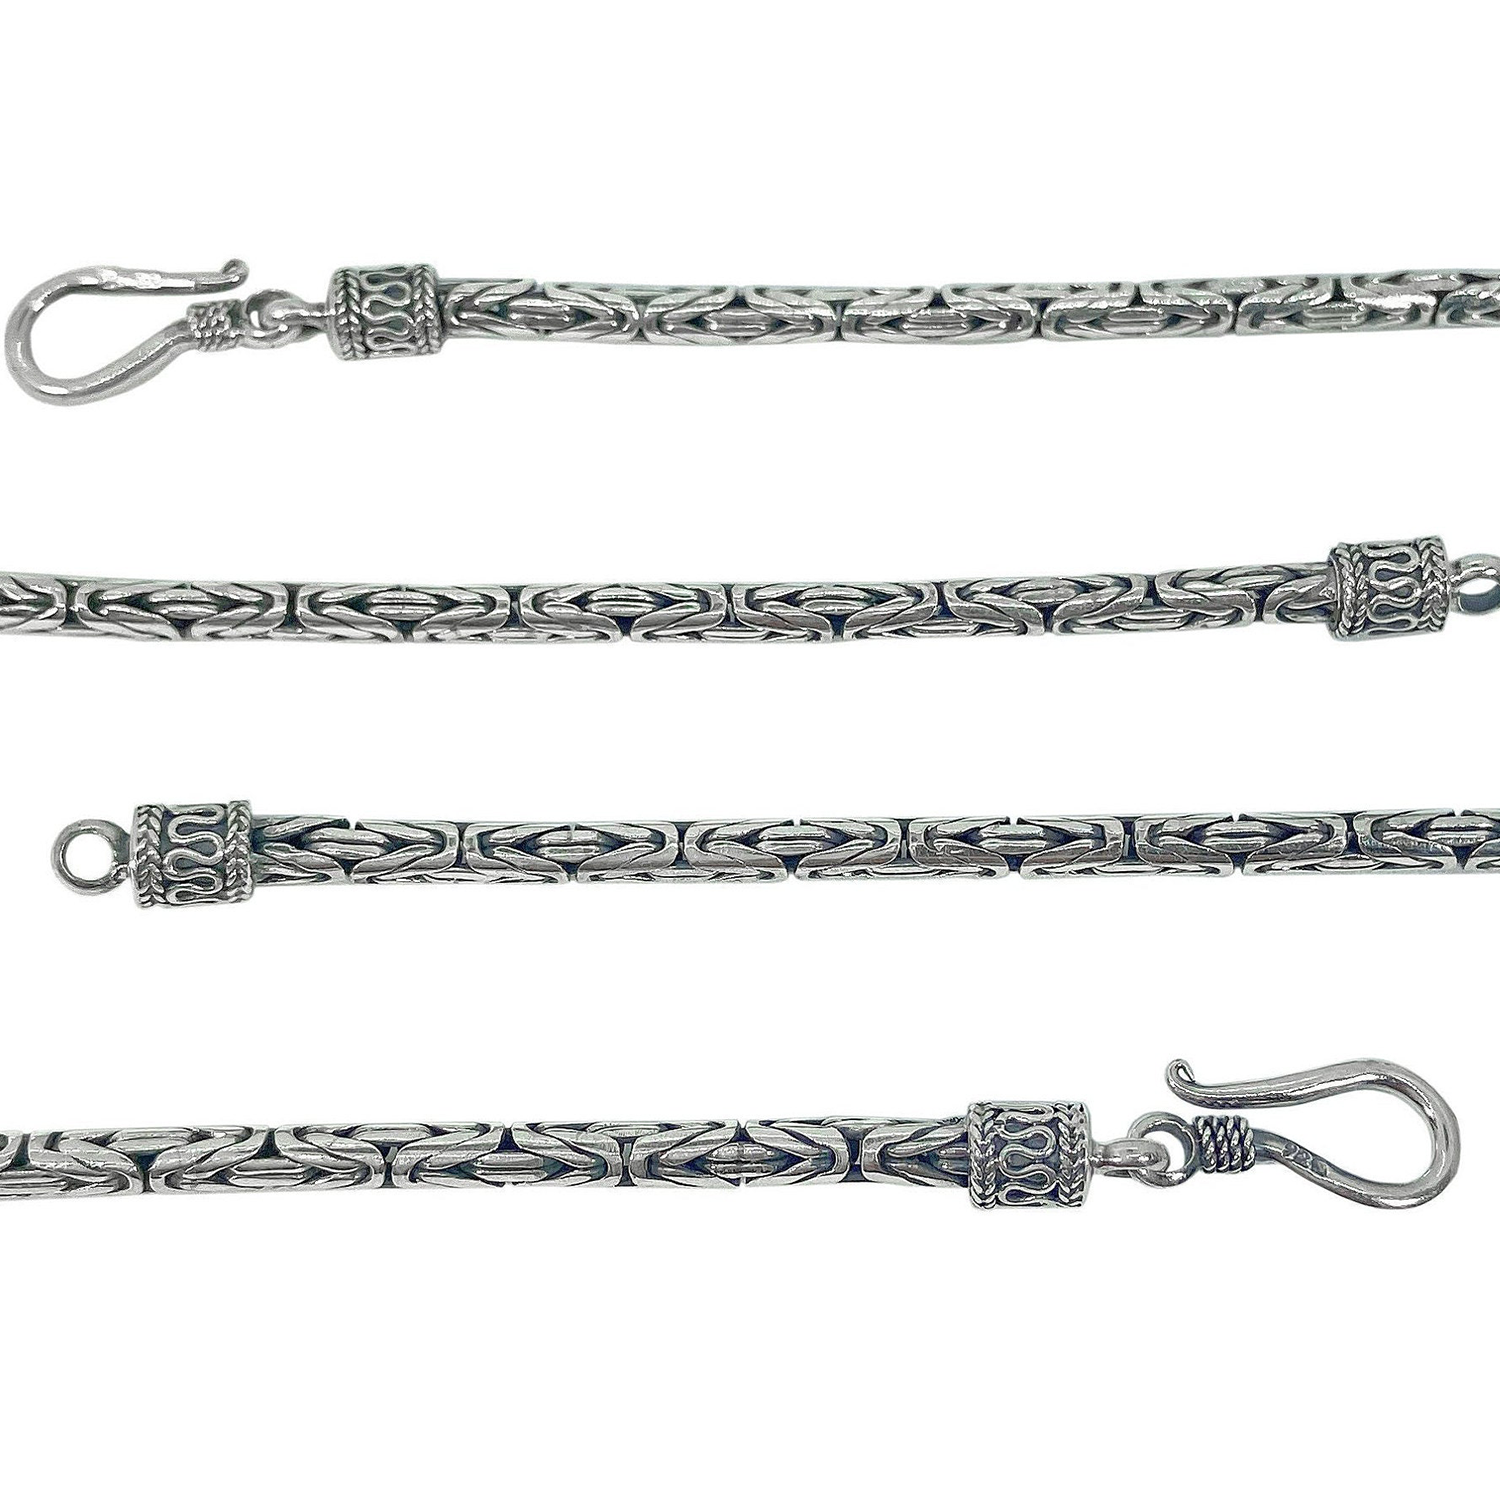 Mens Silver Borobudur Necklace - 3mm Byzantine Link